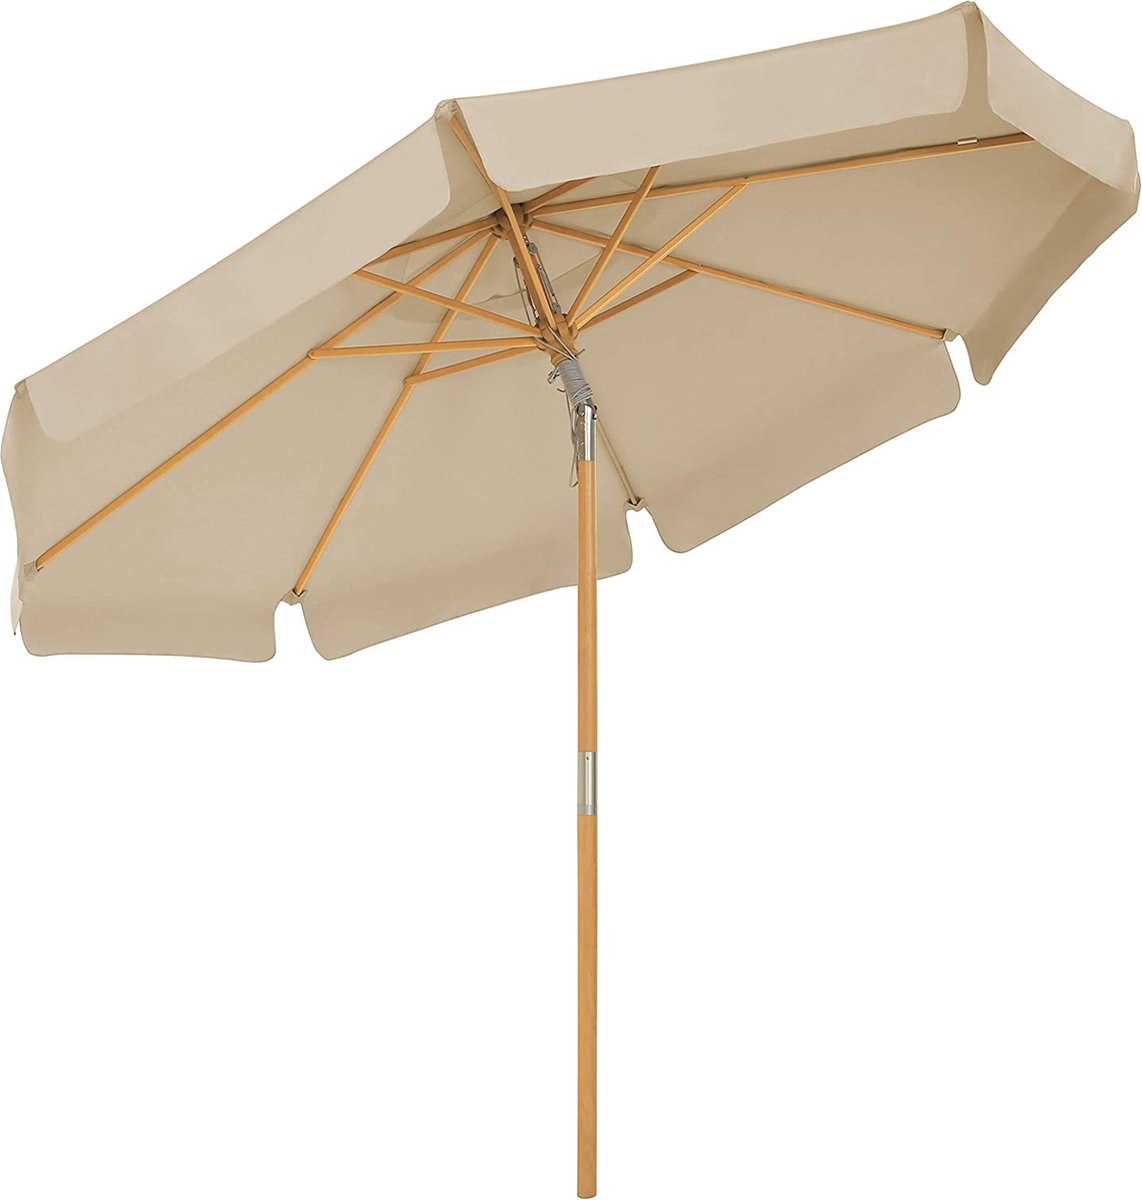 SONGMICS parasol 300 cm, achthoekige tuinparasol, zonwering, parasolstok en parasolribben van hout, opvouwbaar, zonder standaard, buiten, balkon, terras, taupe GPU32BR